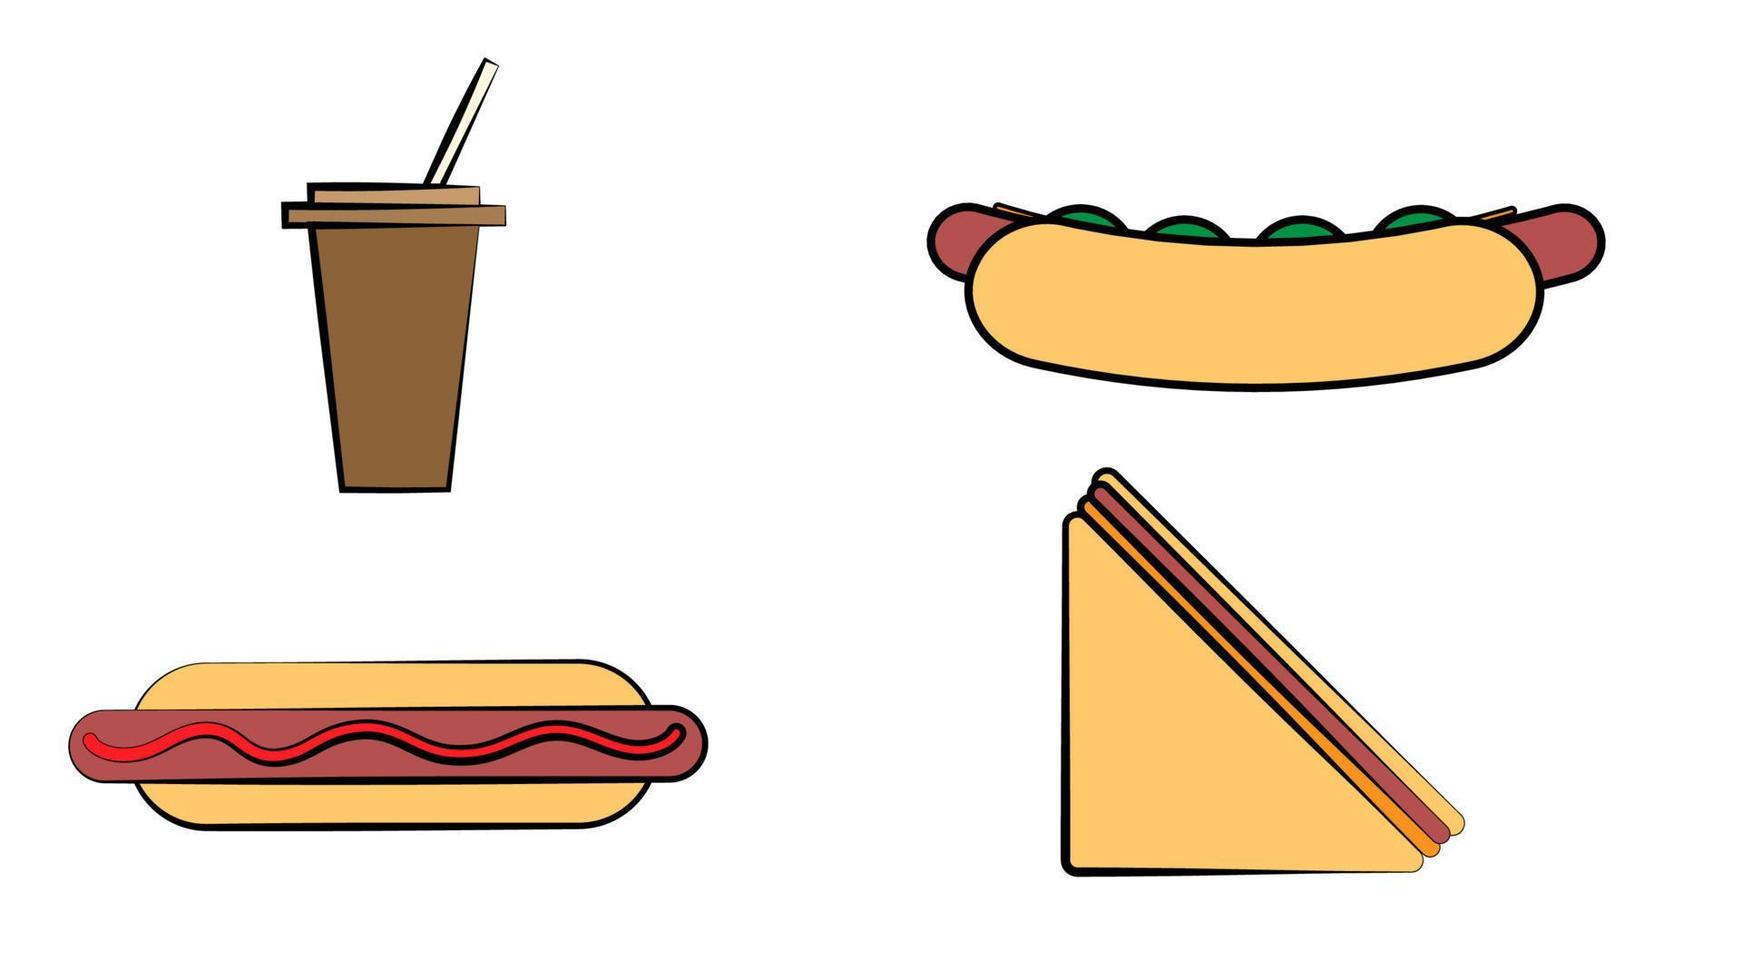 Fast Food Dishes, Drink and Dessert Set, Croissant, Ice Cream, Burger, Sandwich, Soda Drink, Hot Dog Vector Illustration